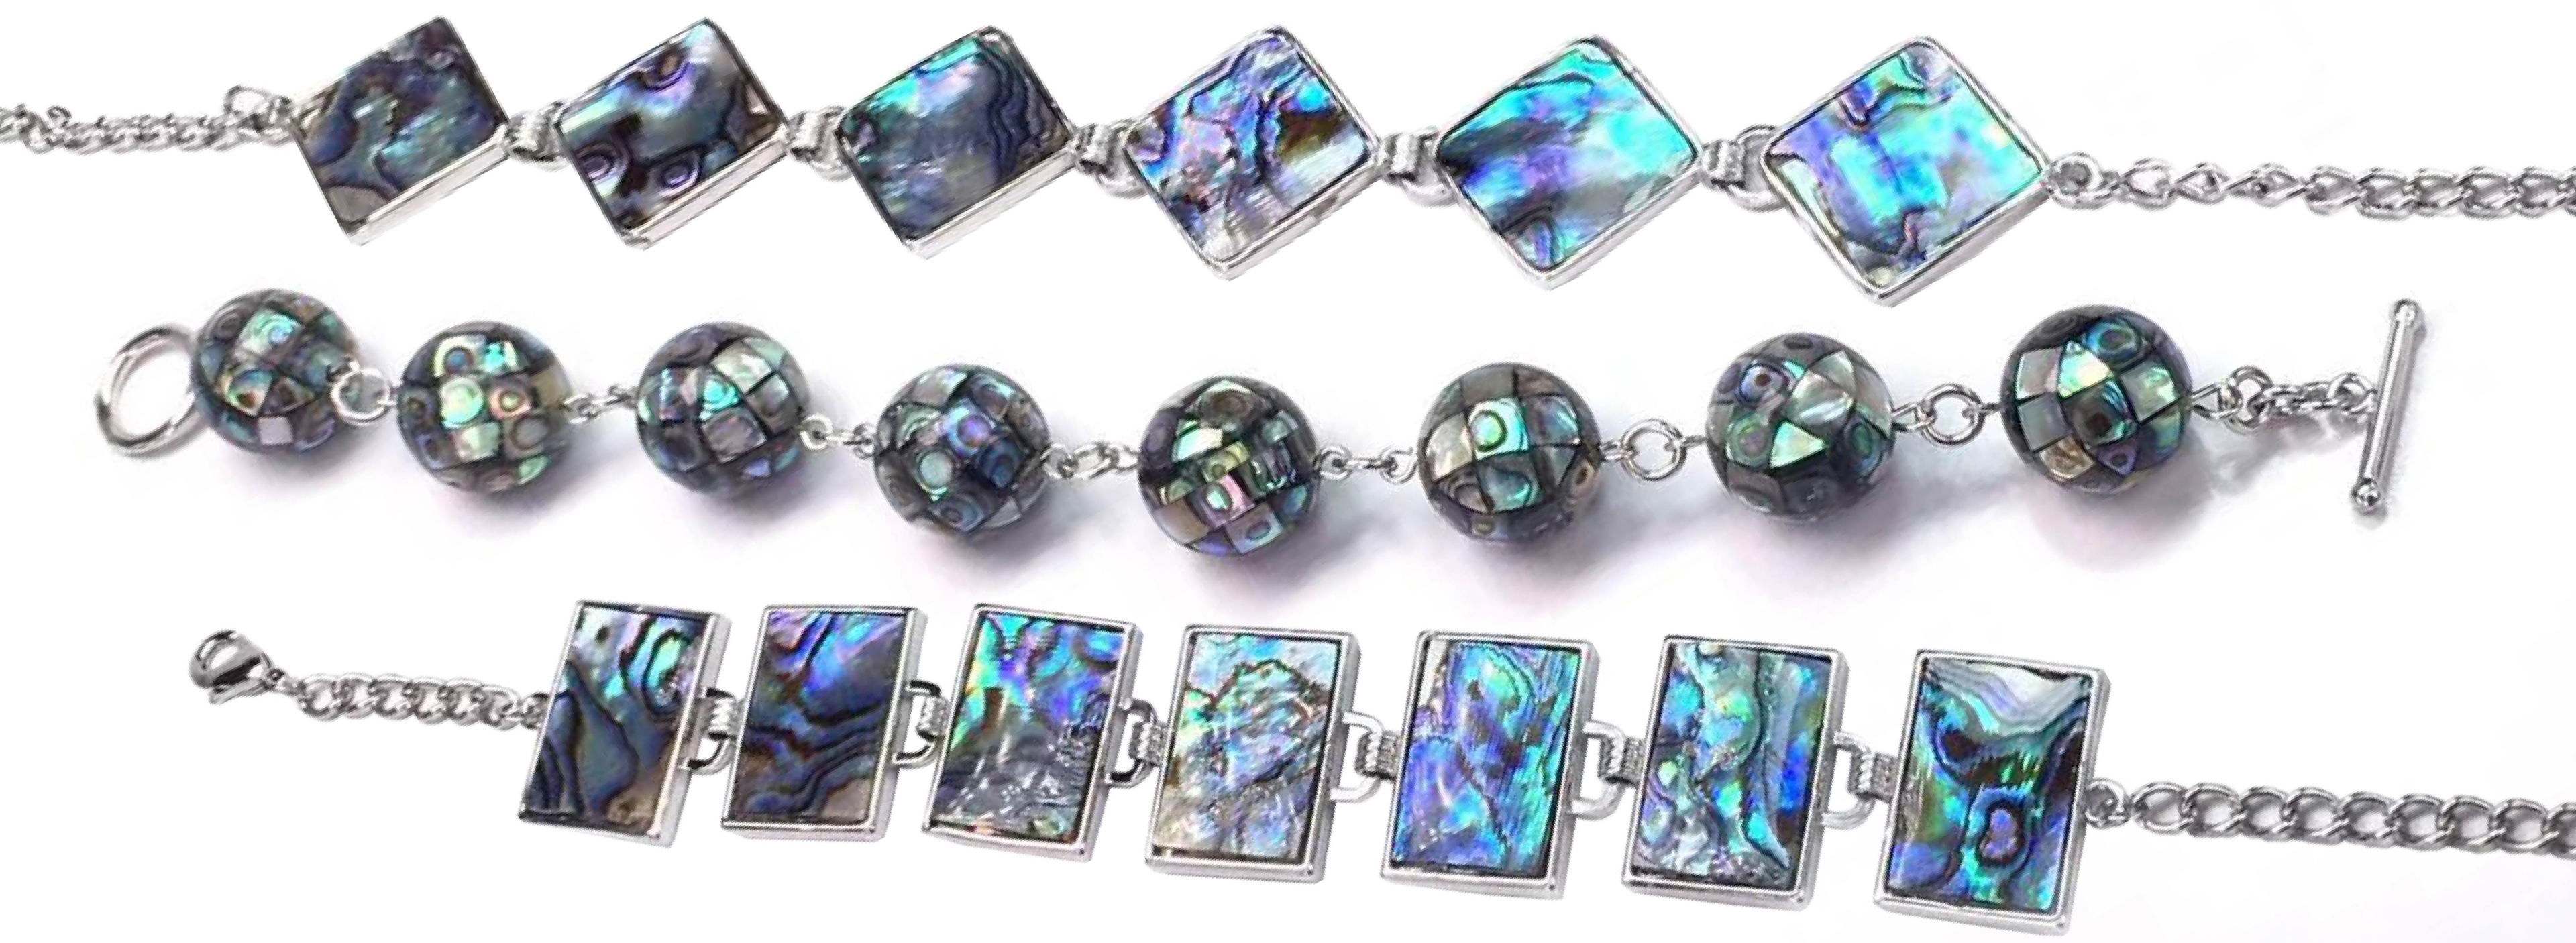 Top to Bottom: Diamond Shape Flat Bead Abalone Bracelet | Round Bead Abalone Bracelet | Rectangular Flat Bead Abalone Bracelet